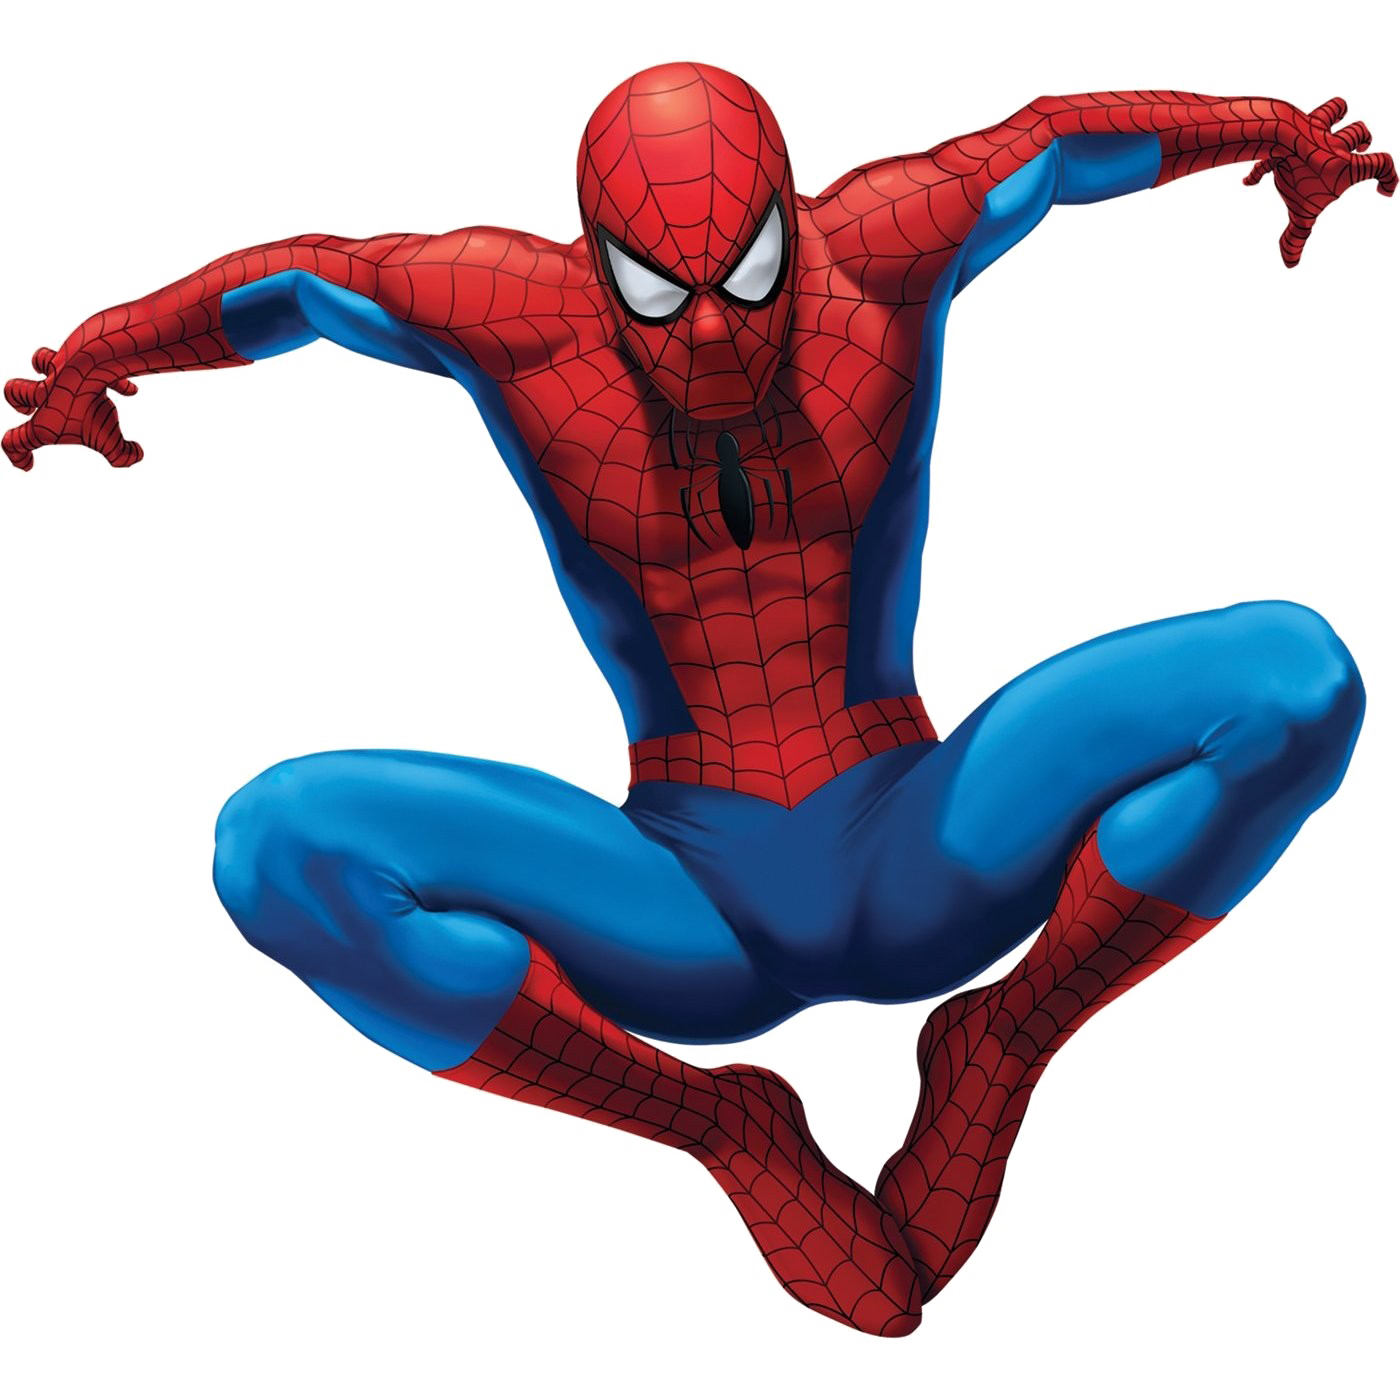 Spider-Man PNG Image Background